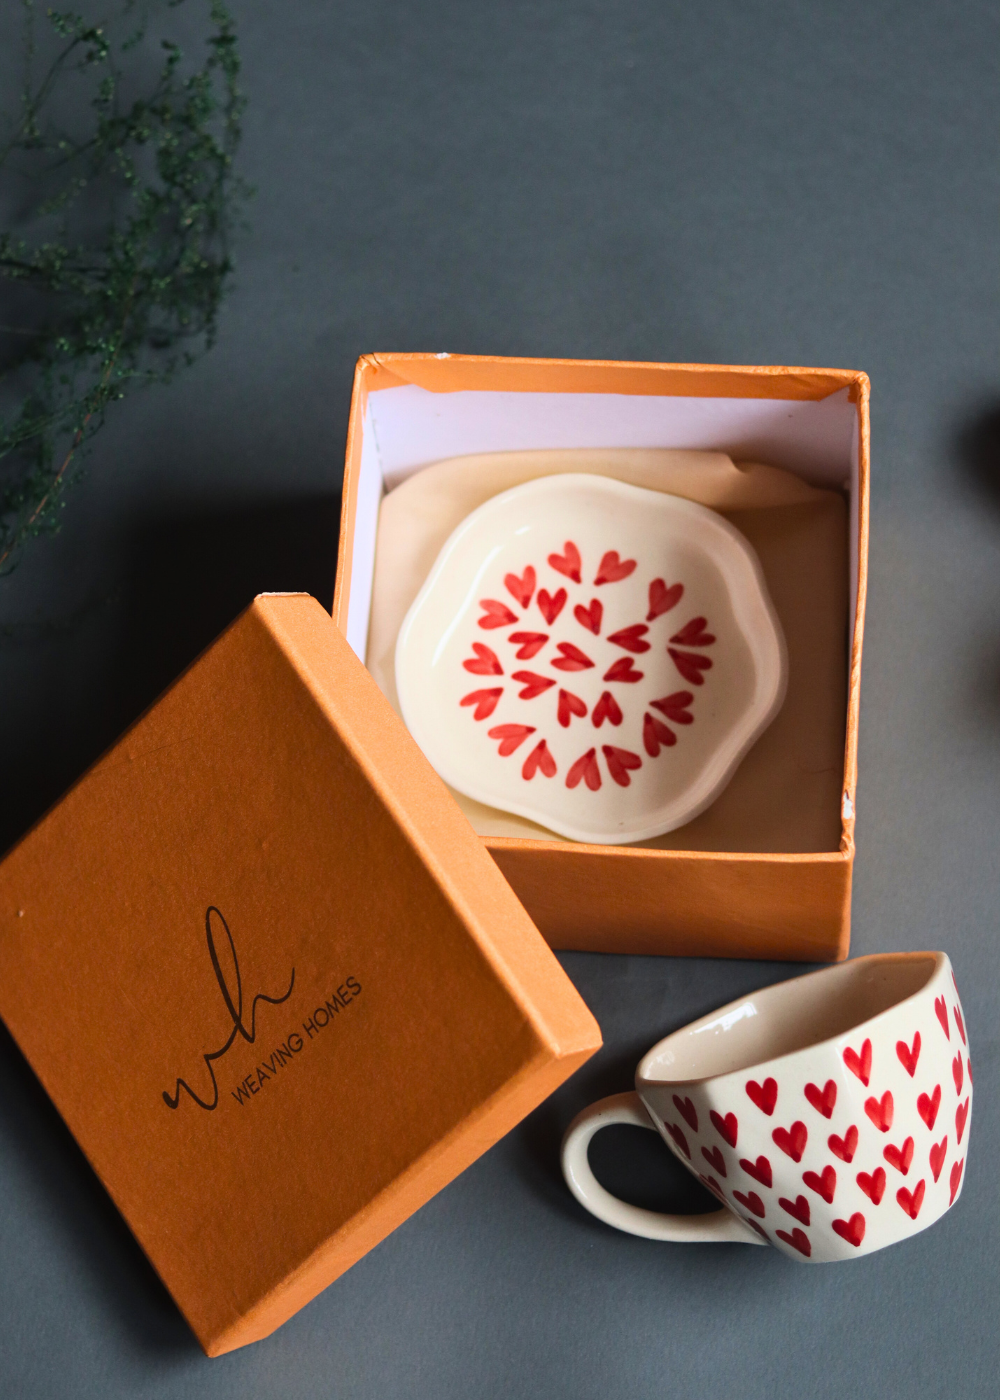 Heart mug & All heart dessert plate in a gift box